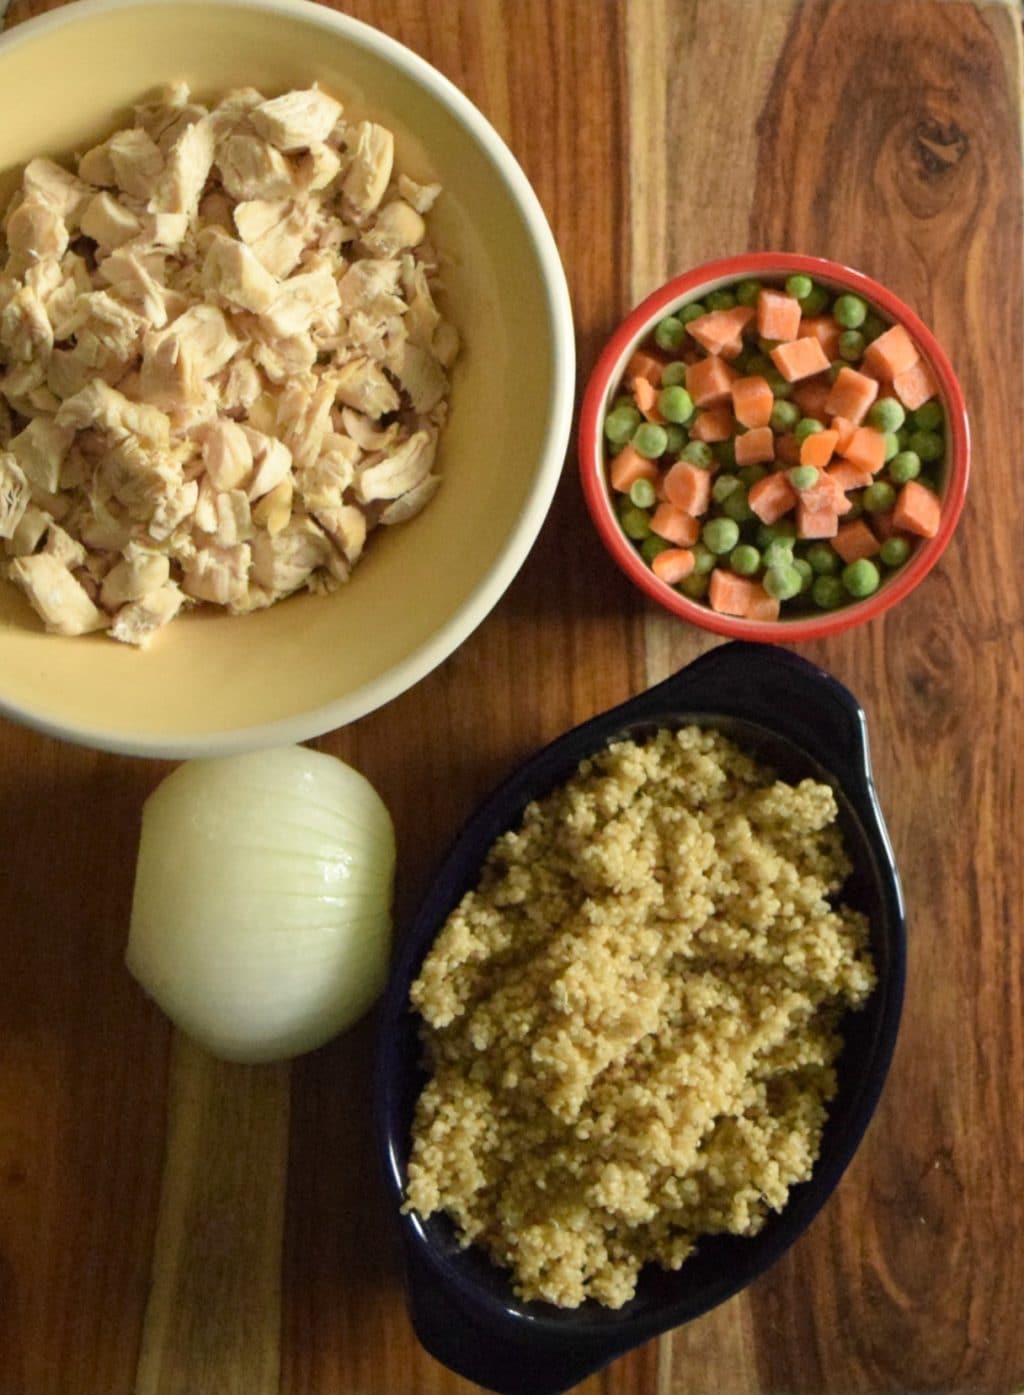 You need chicken, quinoa, and veggies to make this cream chicken and quinoa casserole